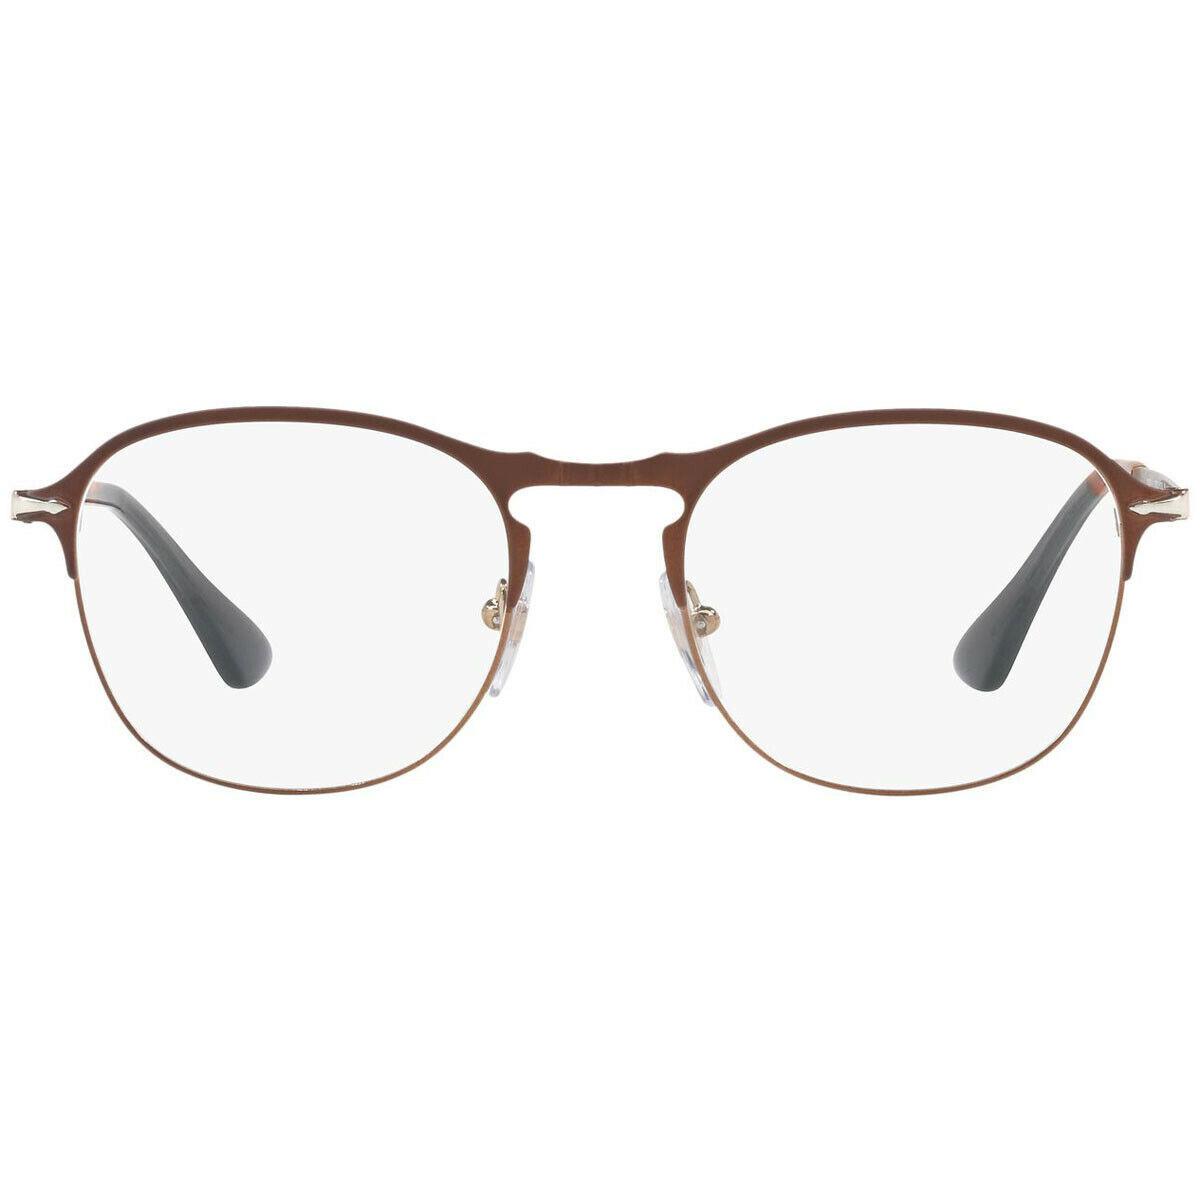 Persol Eyeglasses PO7007-v 1072 Brown Frames 51MM ST Rx-able